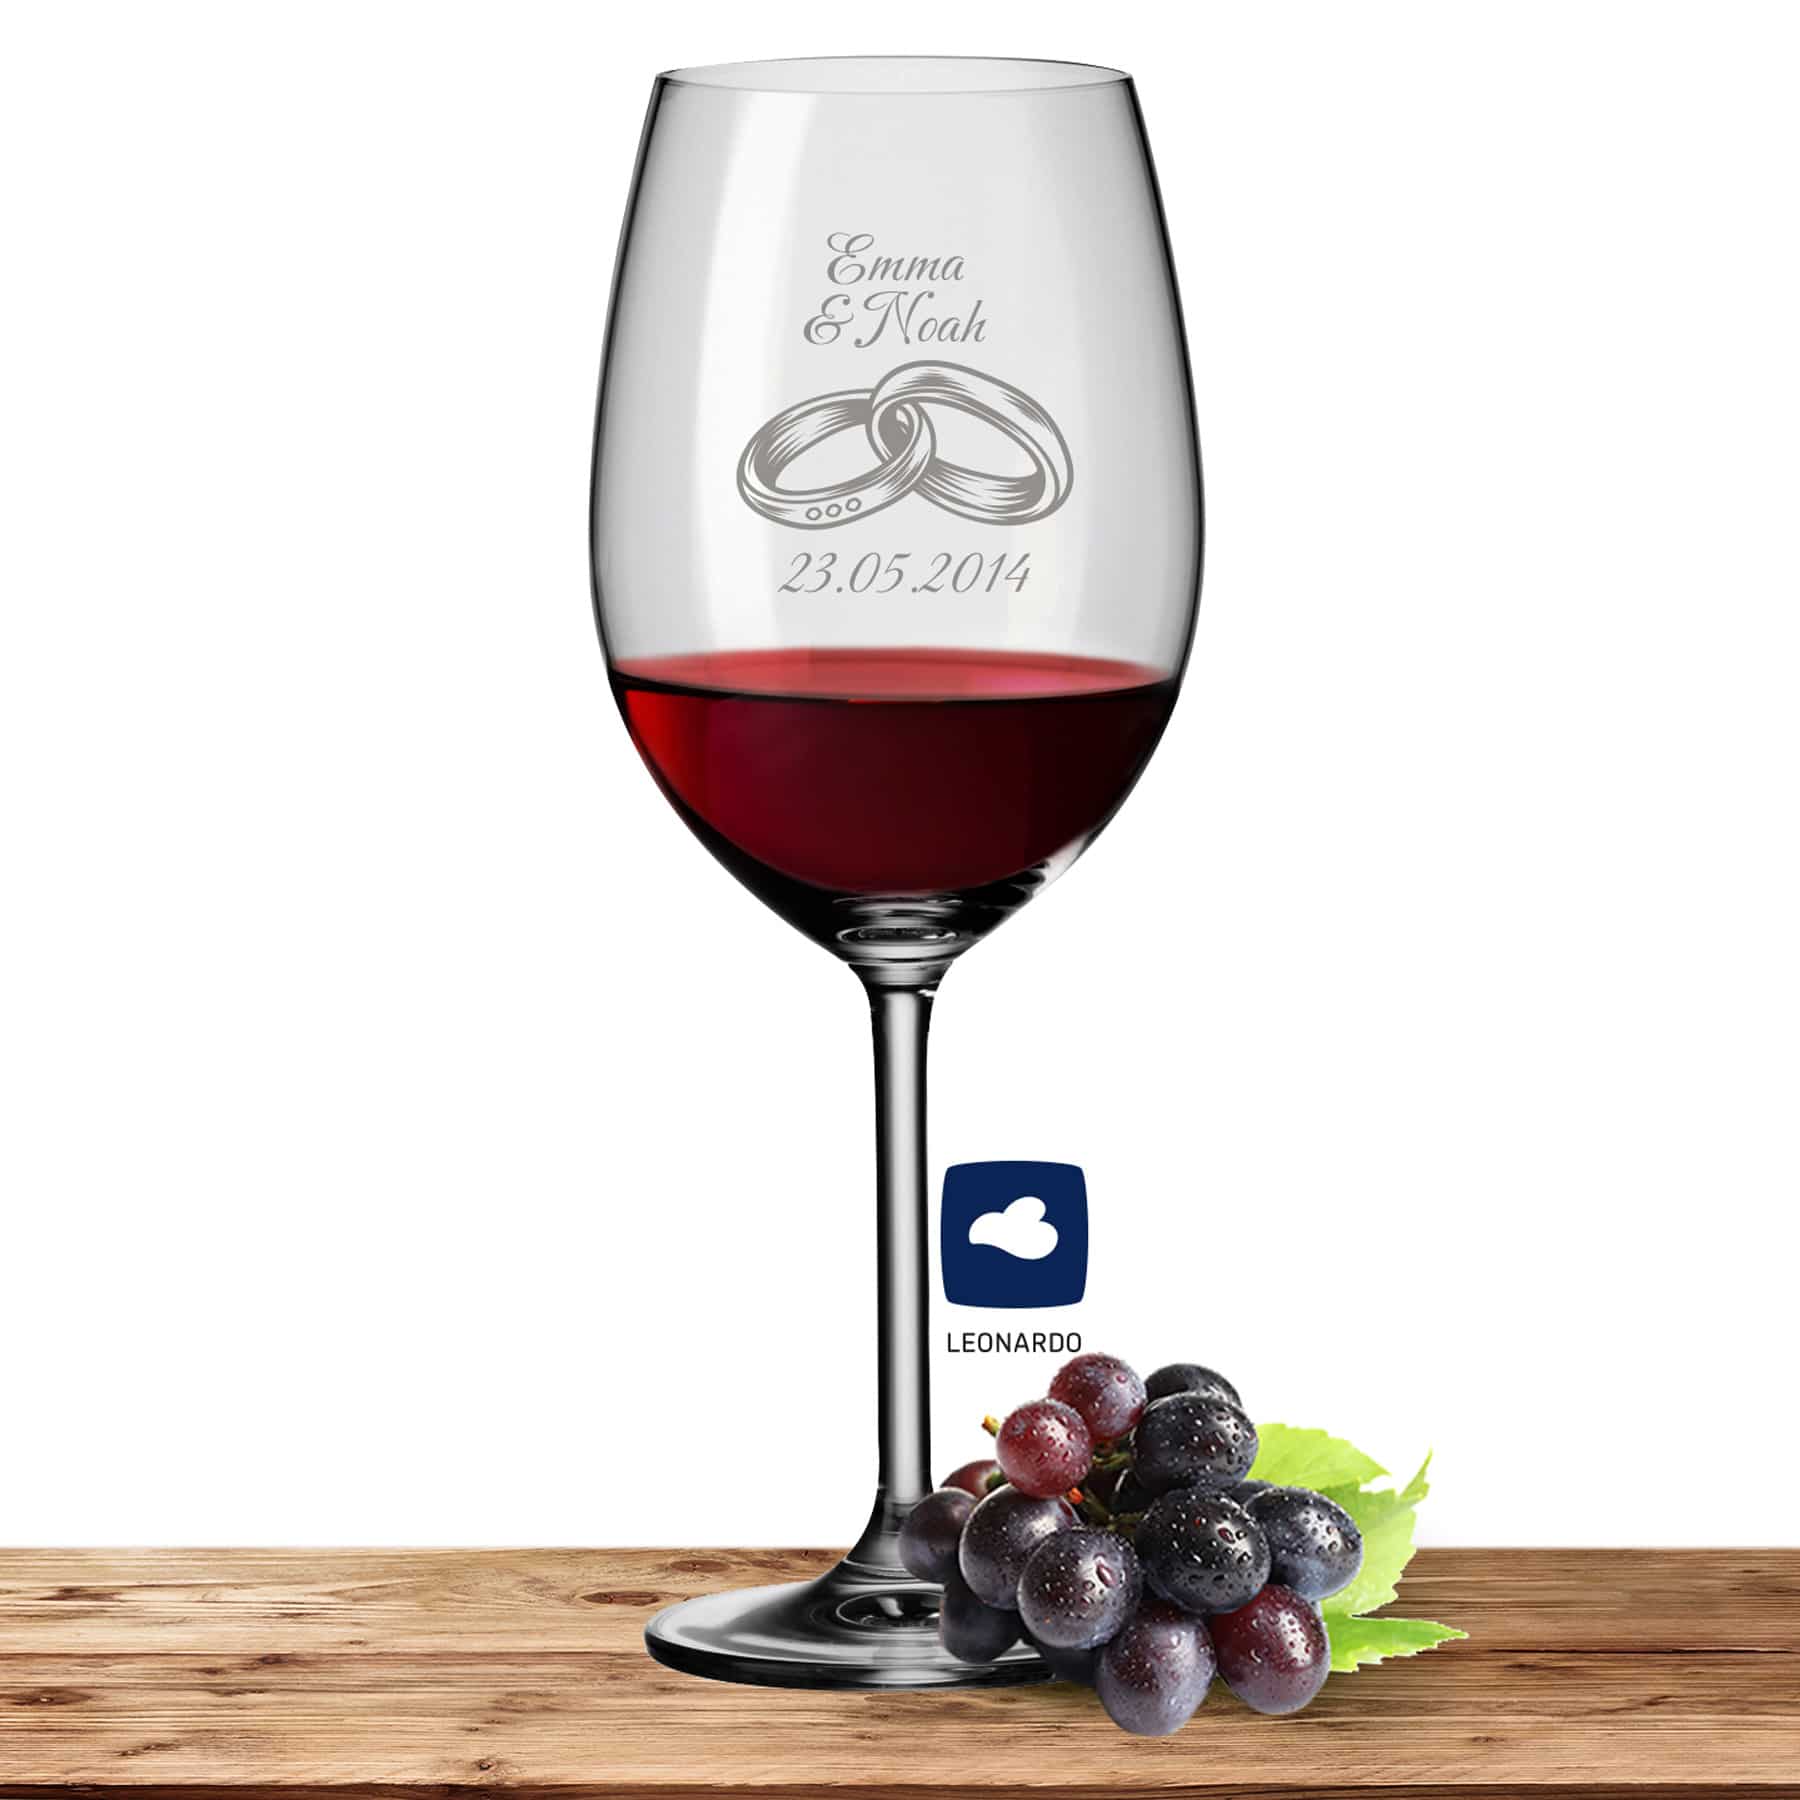 Leonardo Bordeauxglas Rotweinglas DAILY 640ml mit Namen oder Wunschtext graviert (Ringe)